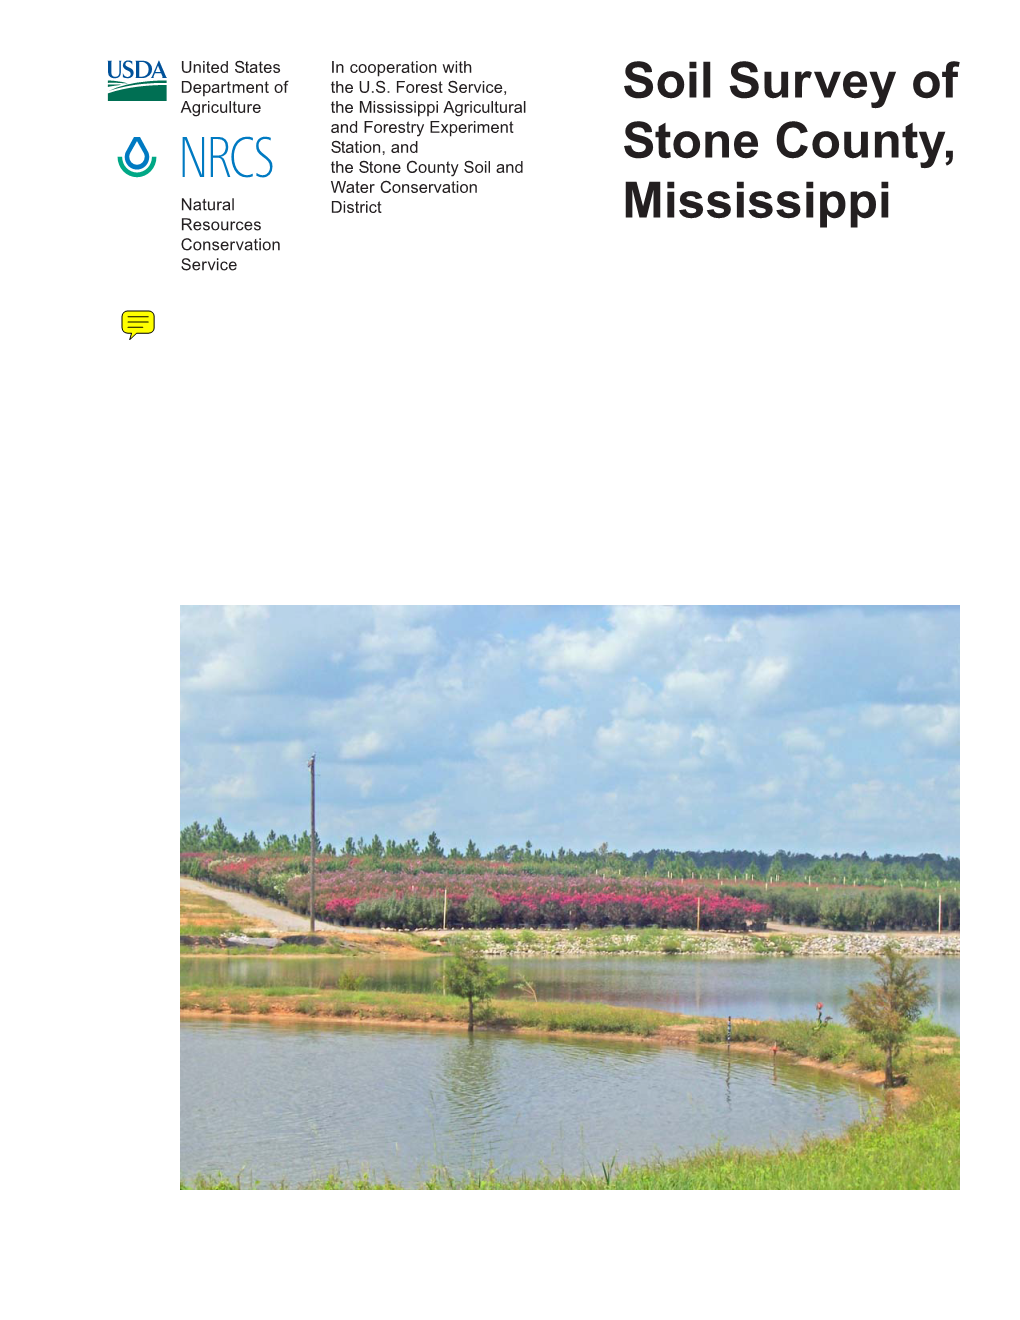 Soil Survey of Stone County, Mississippi